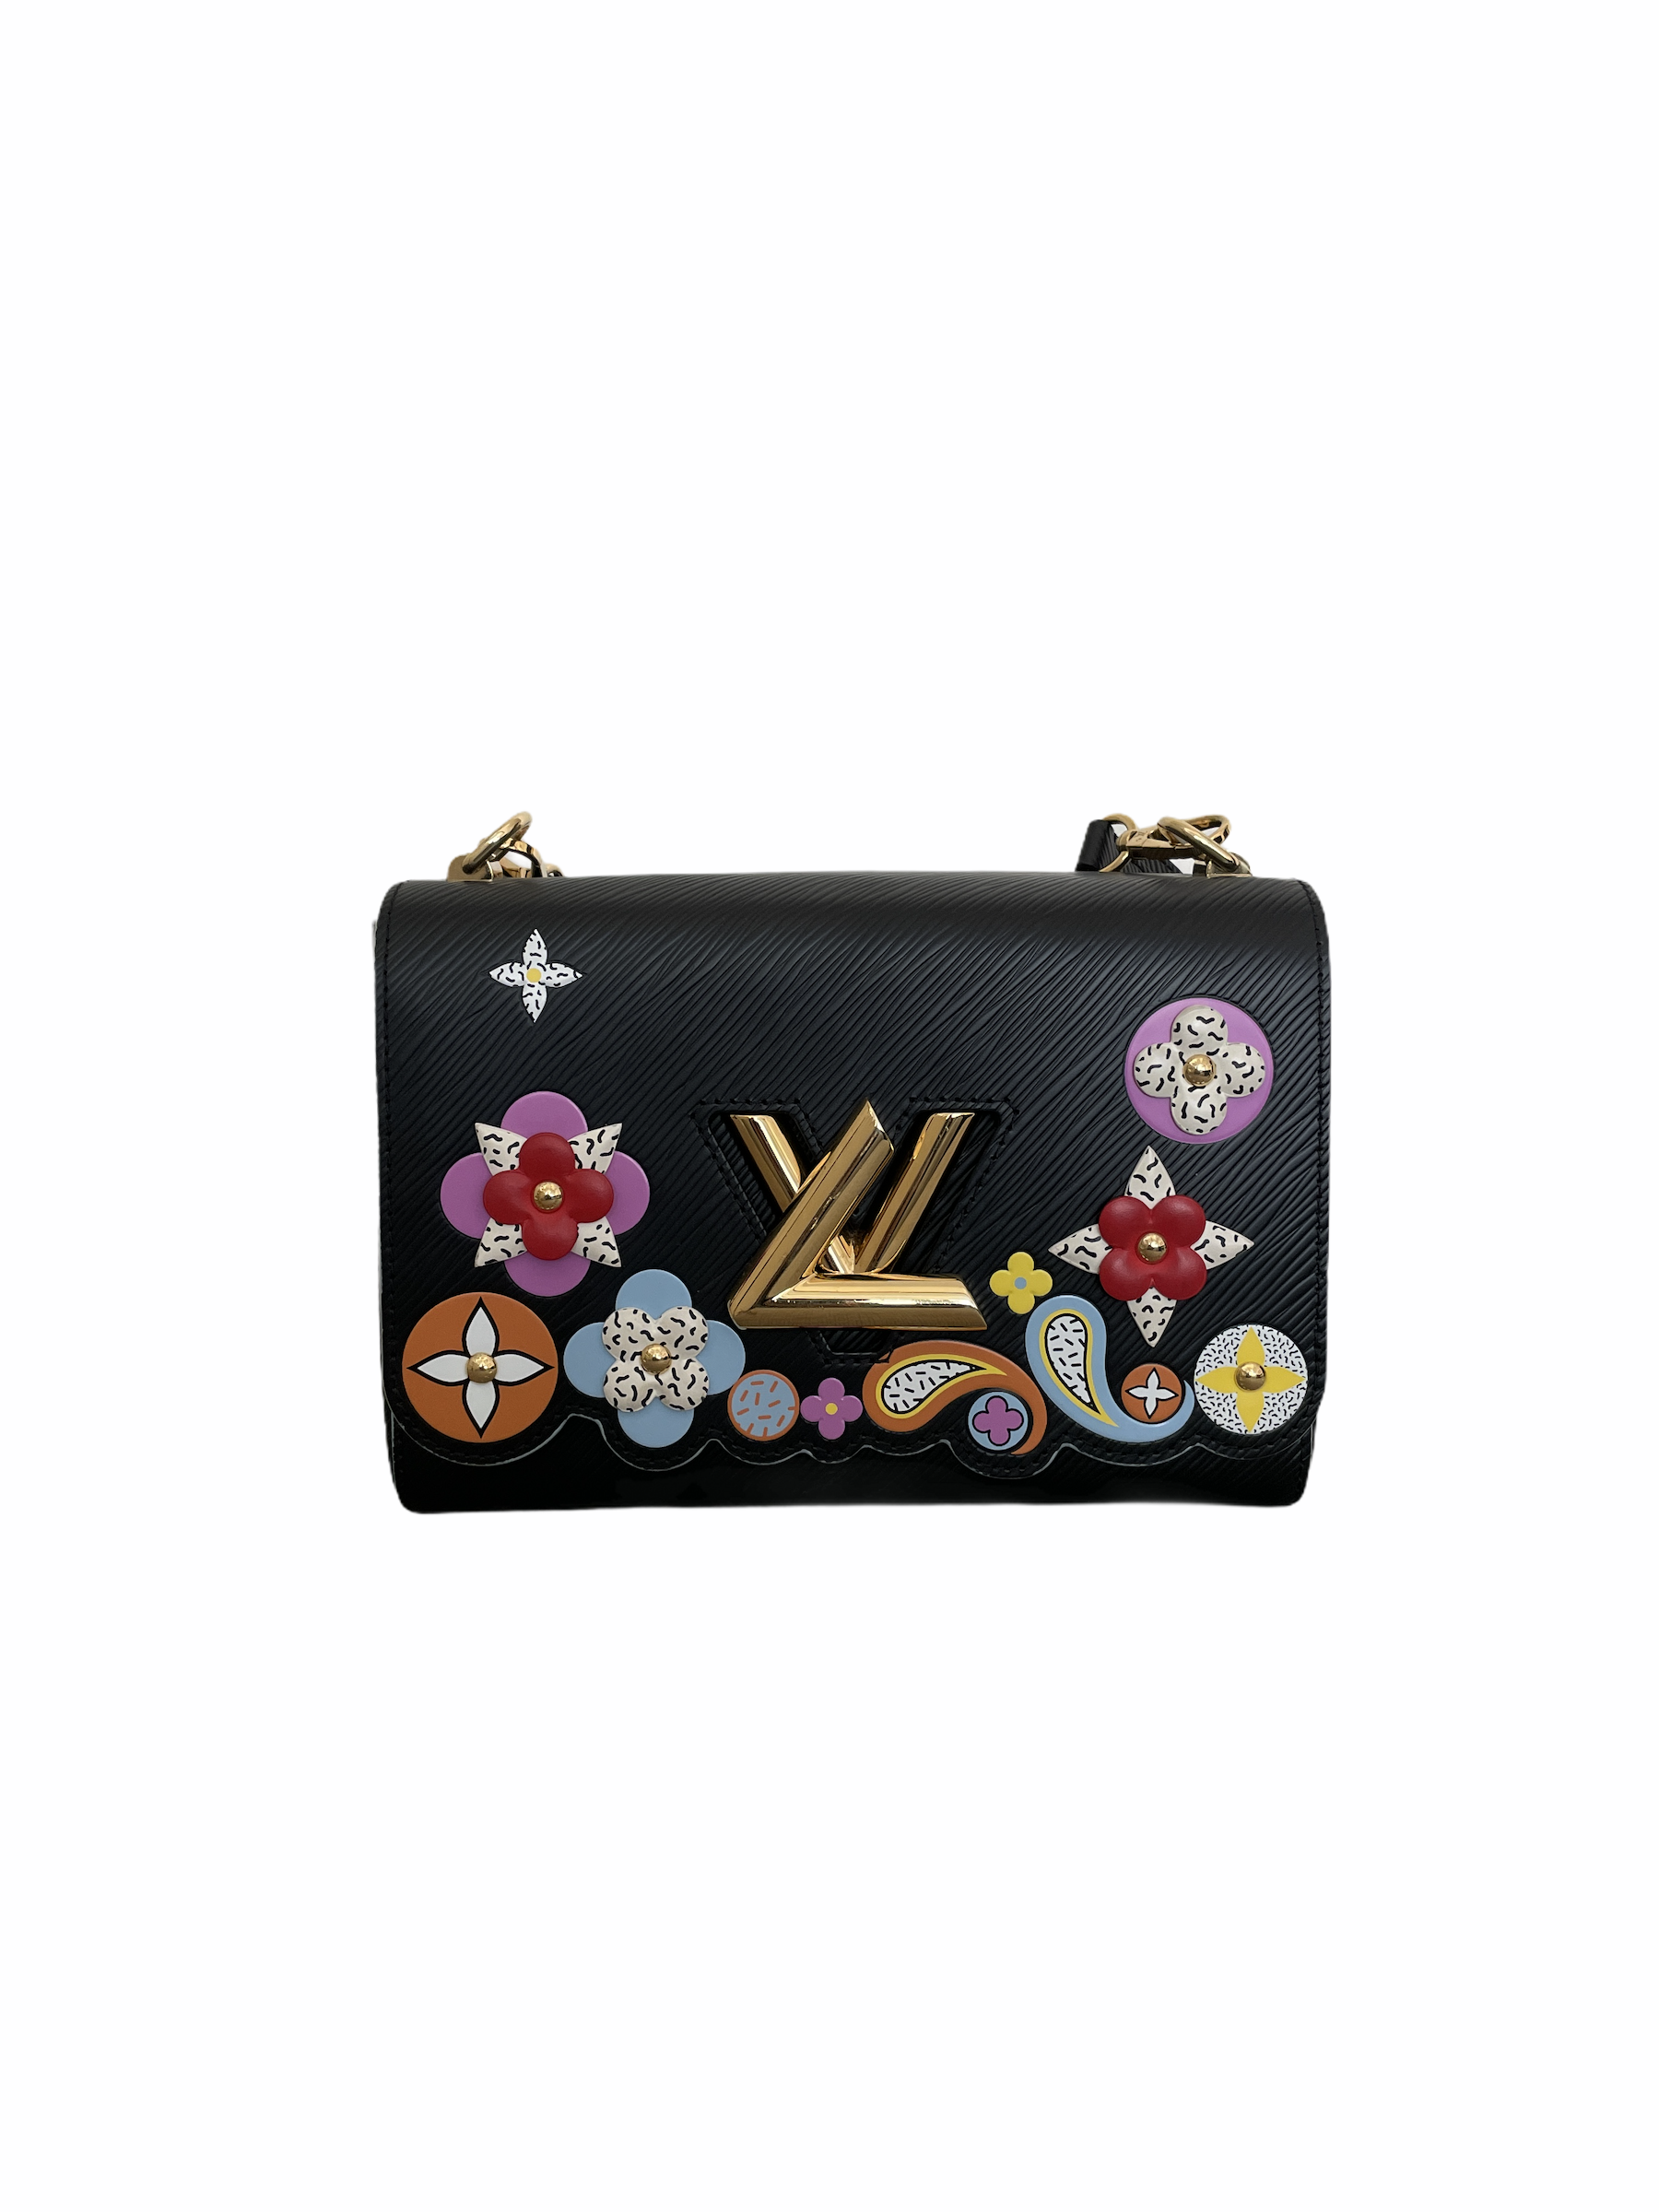 Louis Vuitton Twist Mm Black Epi Leather With Flower